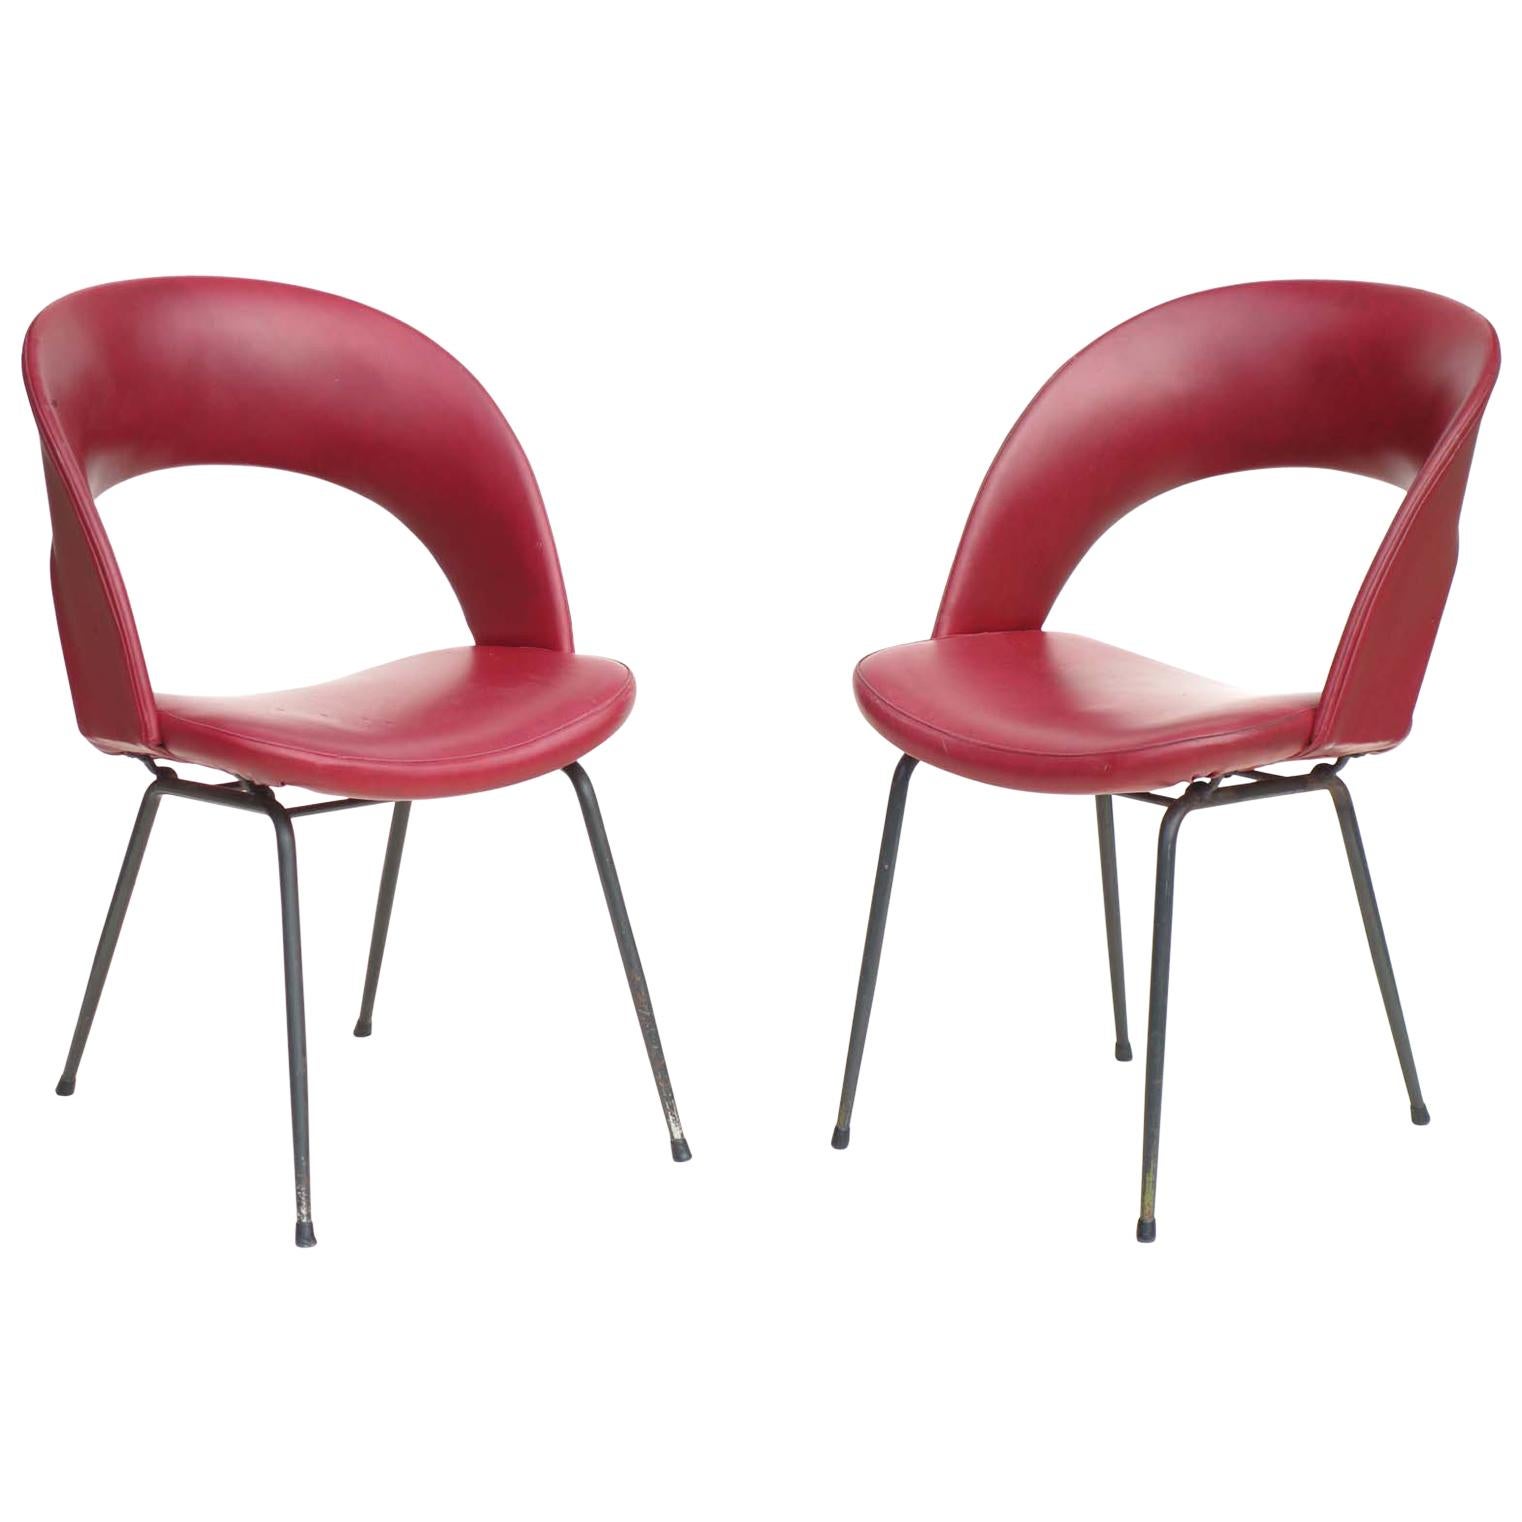 1950s by Gastone Rinaldi for RIMA Midcentury Italian Design Chair Set of 2